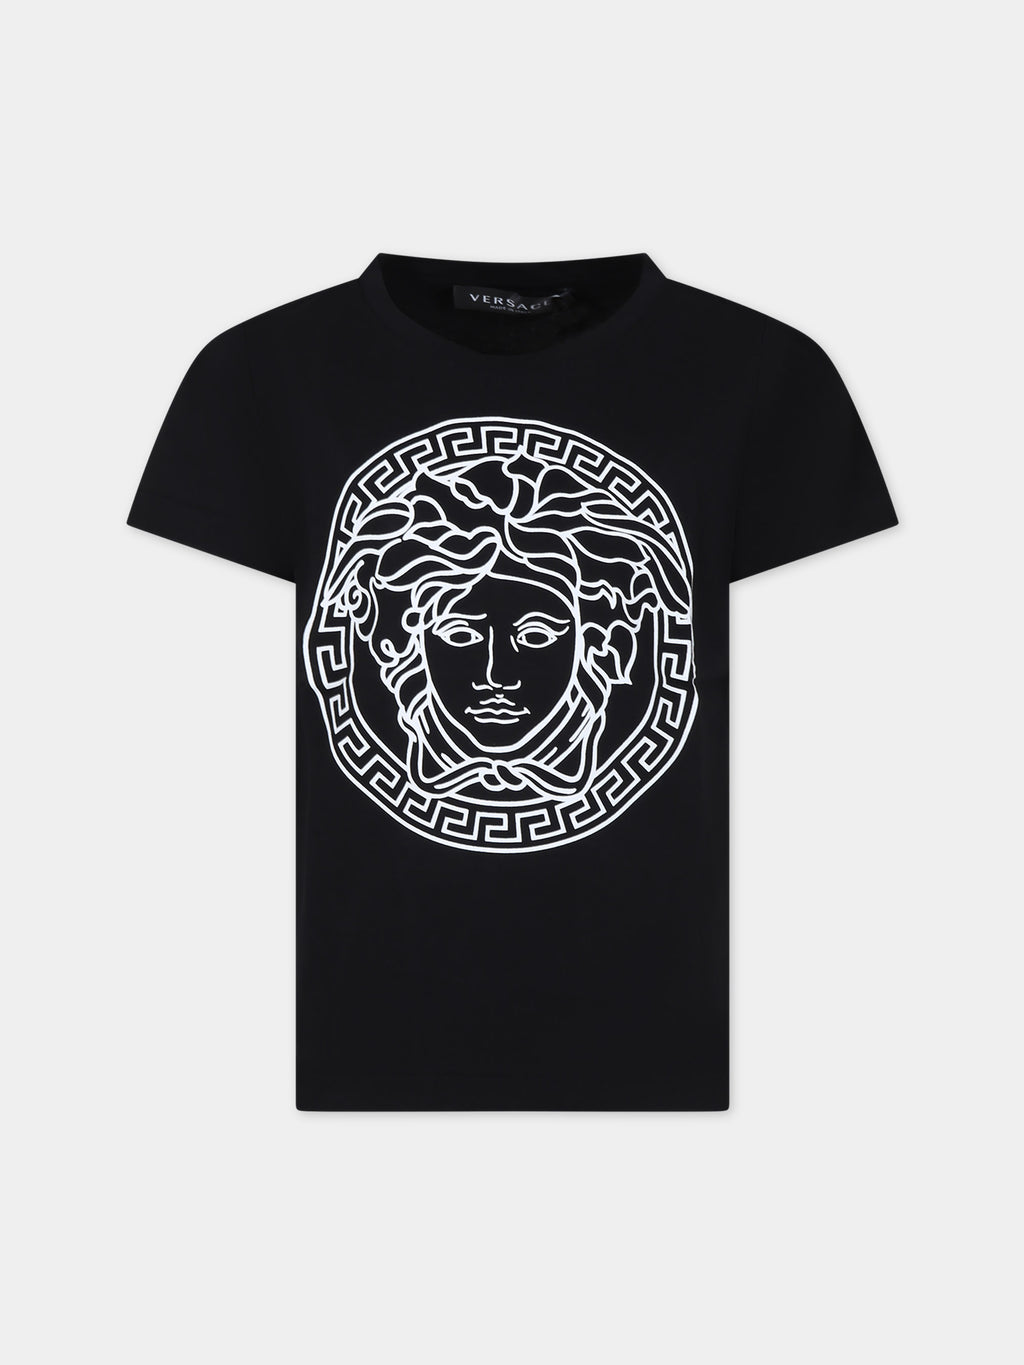 Black t-shirt for kids with Medusa